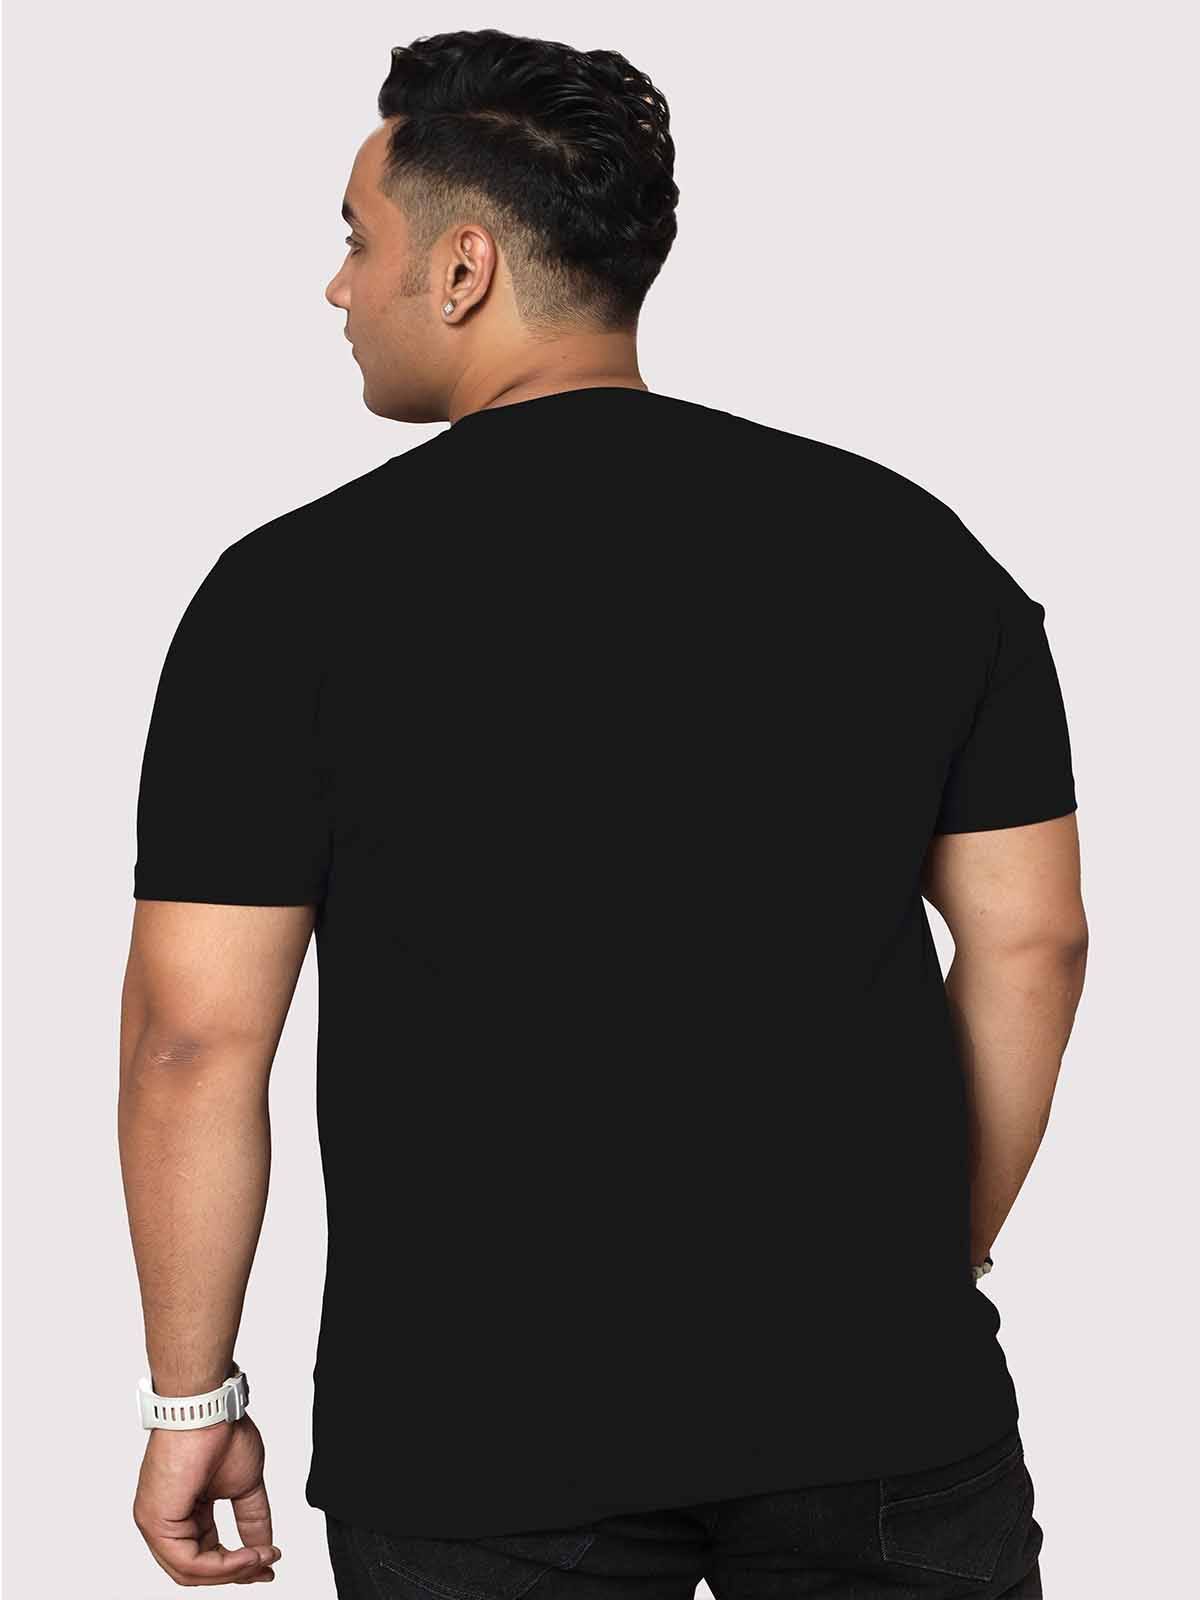 Men Plus Size Black Love My Self Printed Round Neck T-Shirt. - Guniaa Fashions